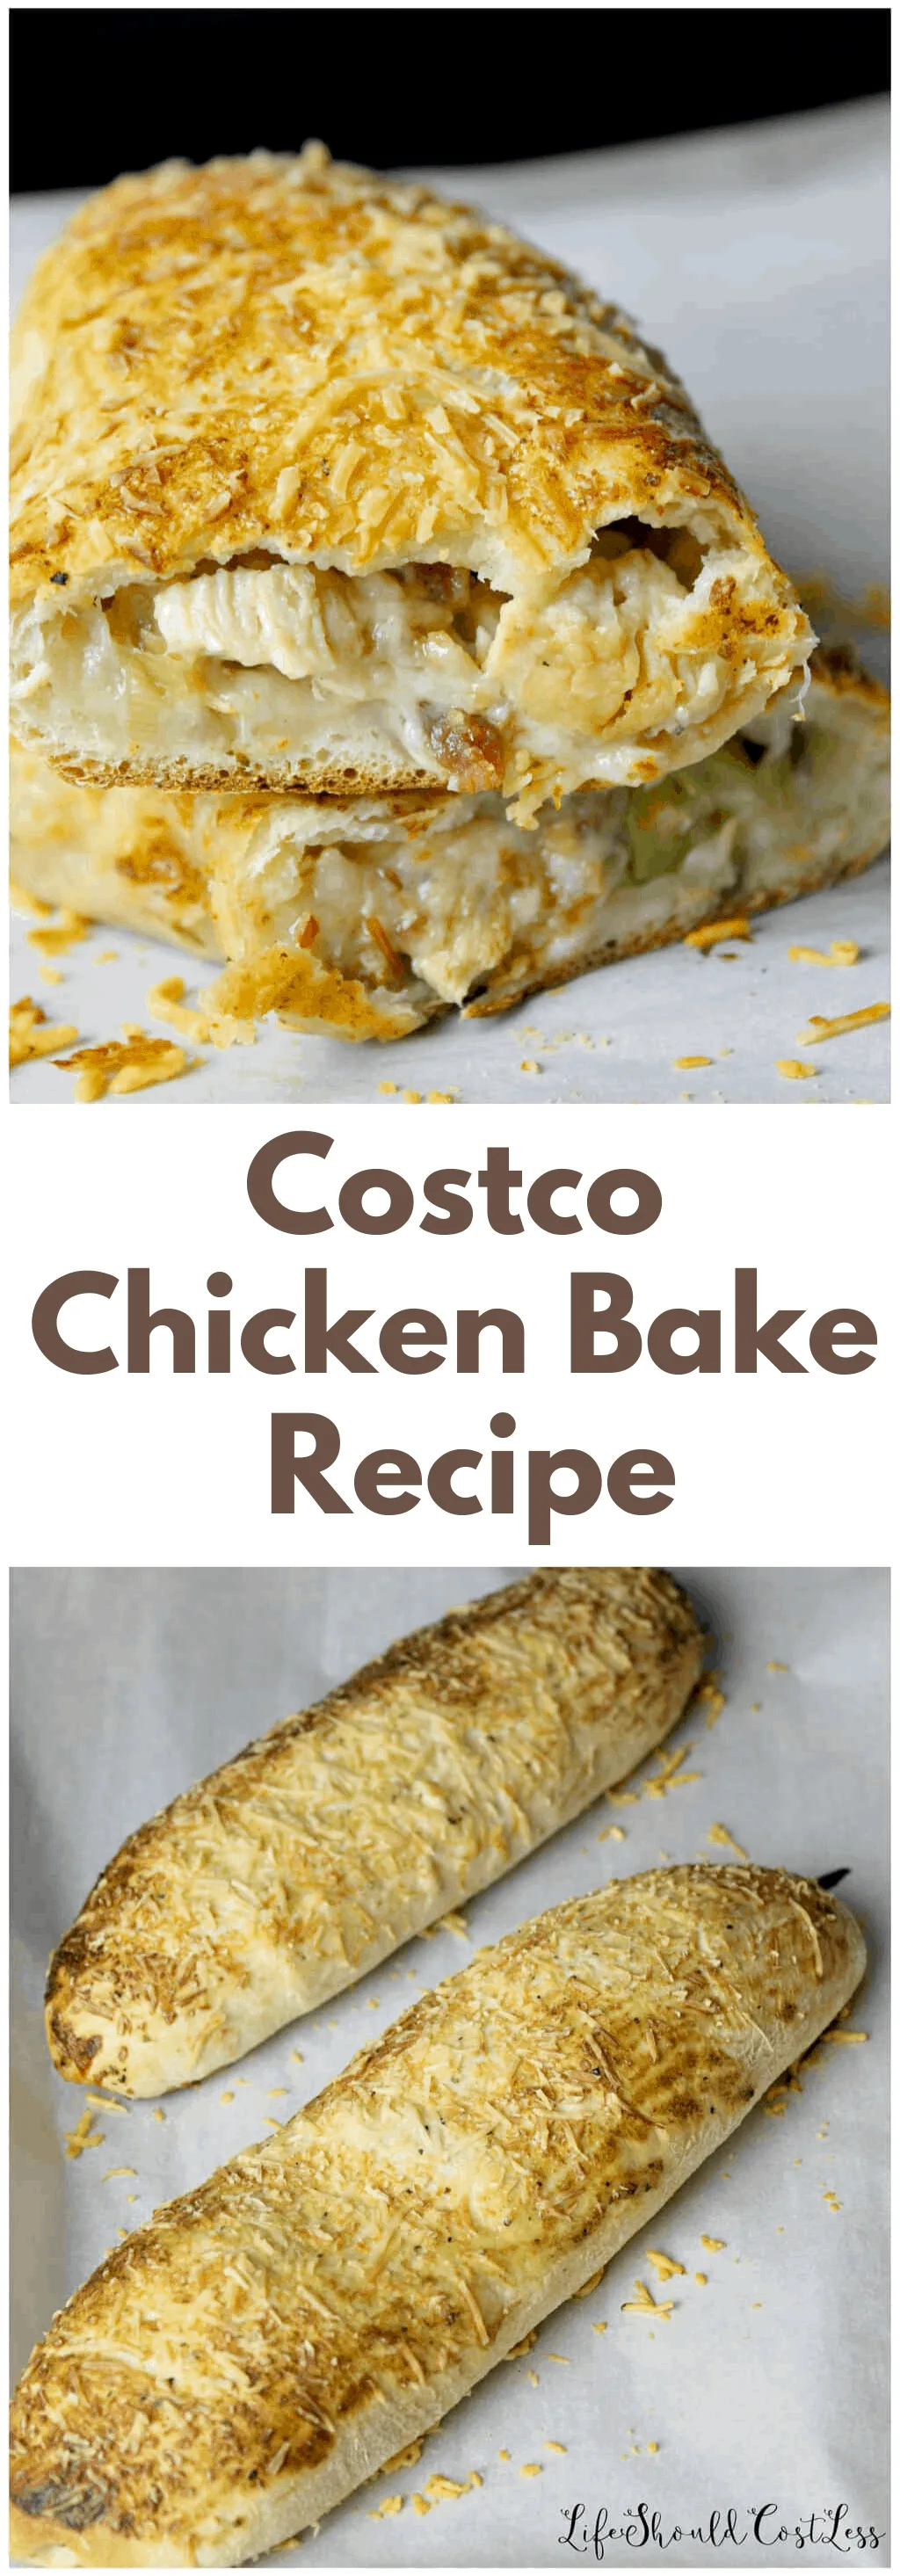 Costco Chicken Bake Recipe - Life Should Cost Less